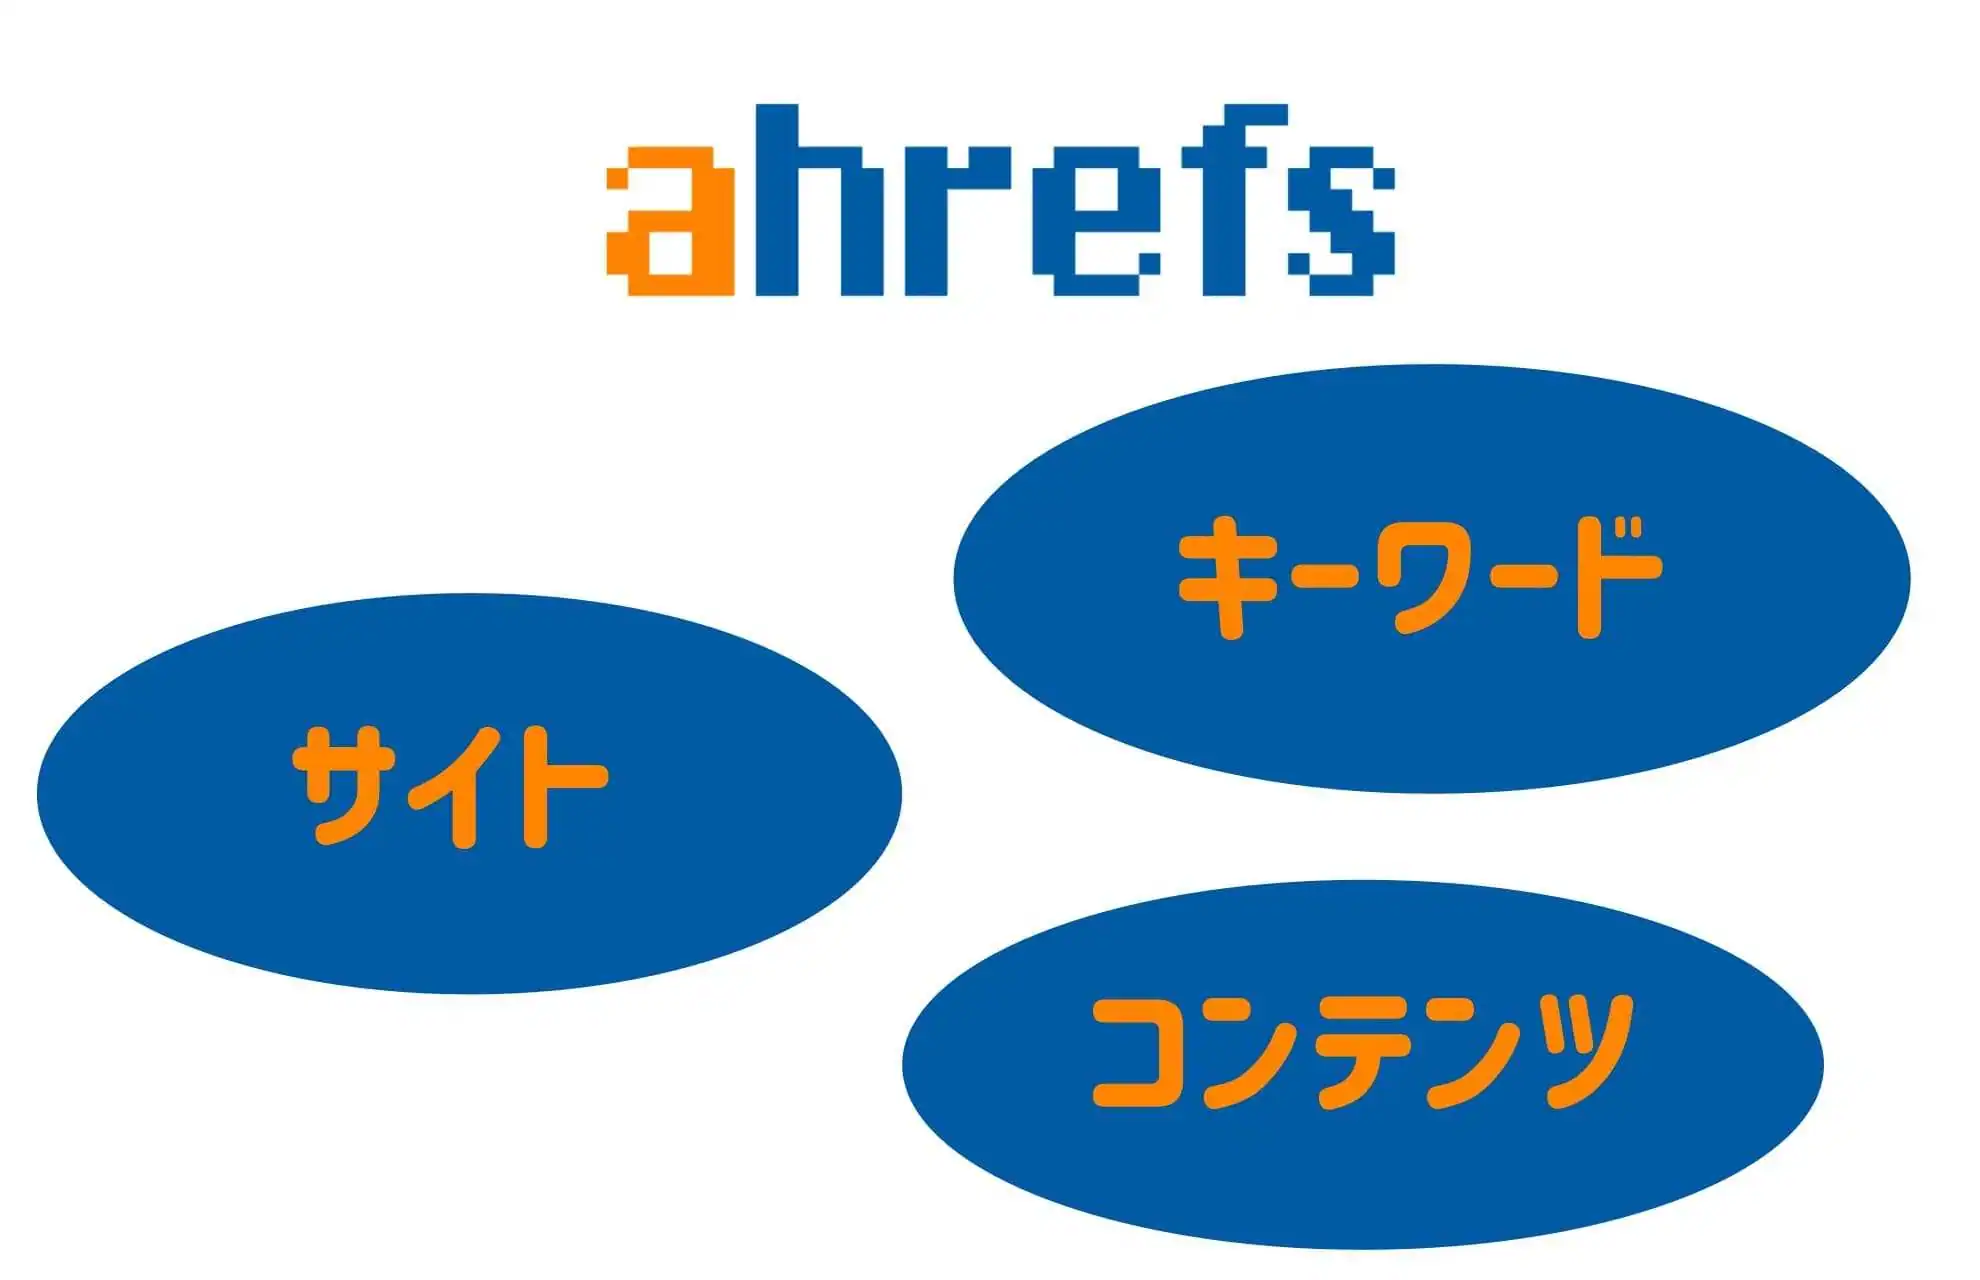 Ahrefsの機能は3つ